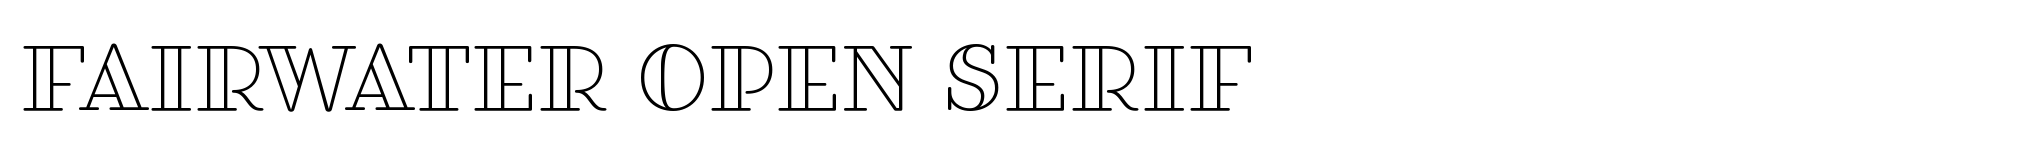 Fairwater Open Serif image